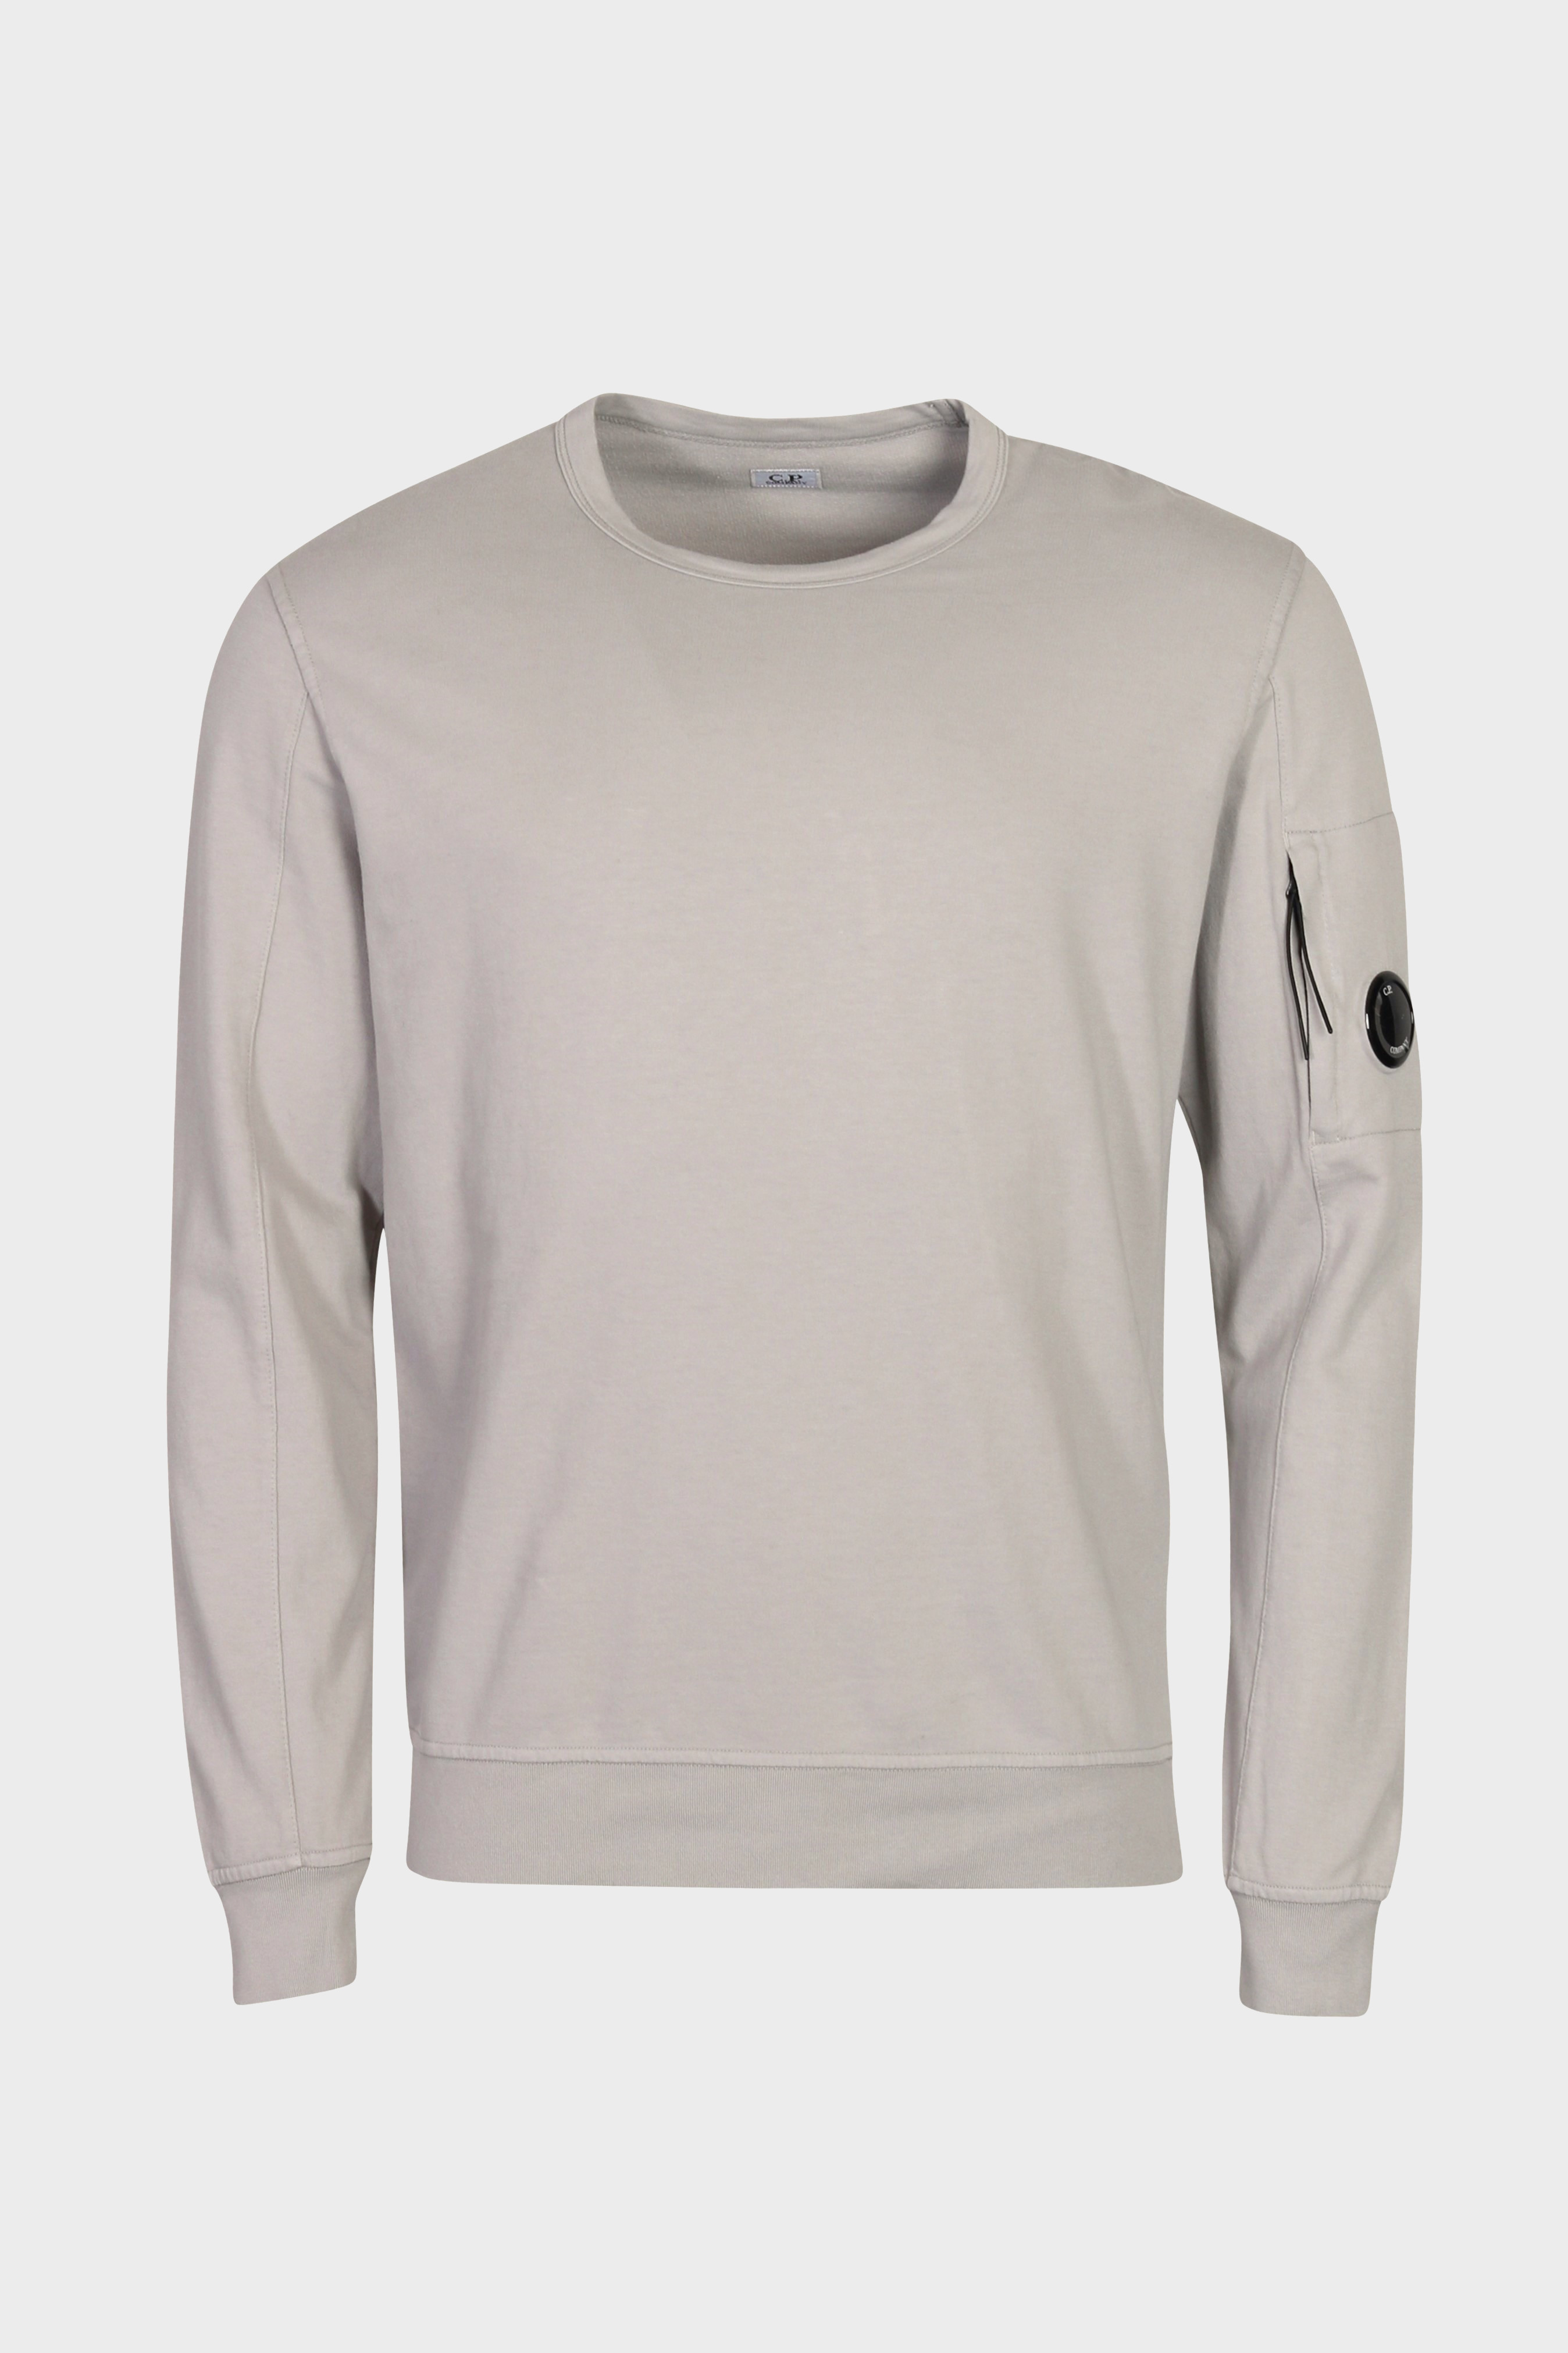 C.P. COMPANY Light Fleece Sweatshirt in Drizzle Grey XL